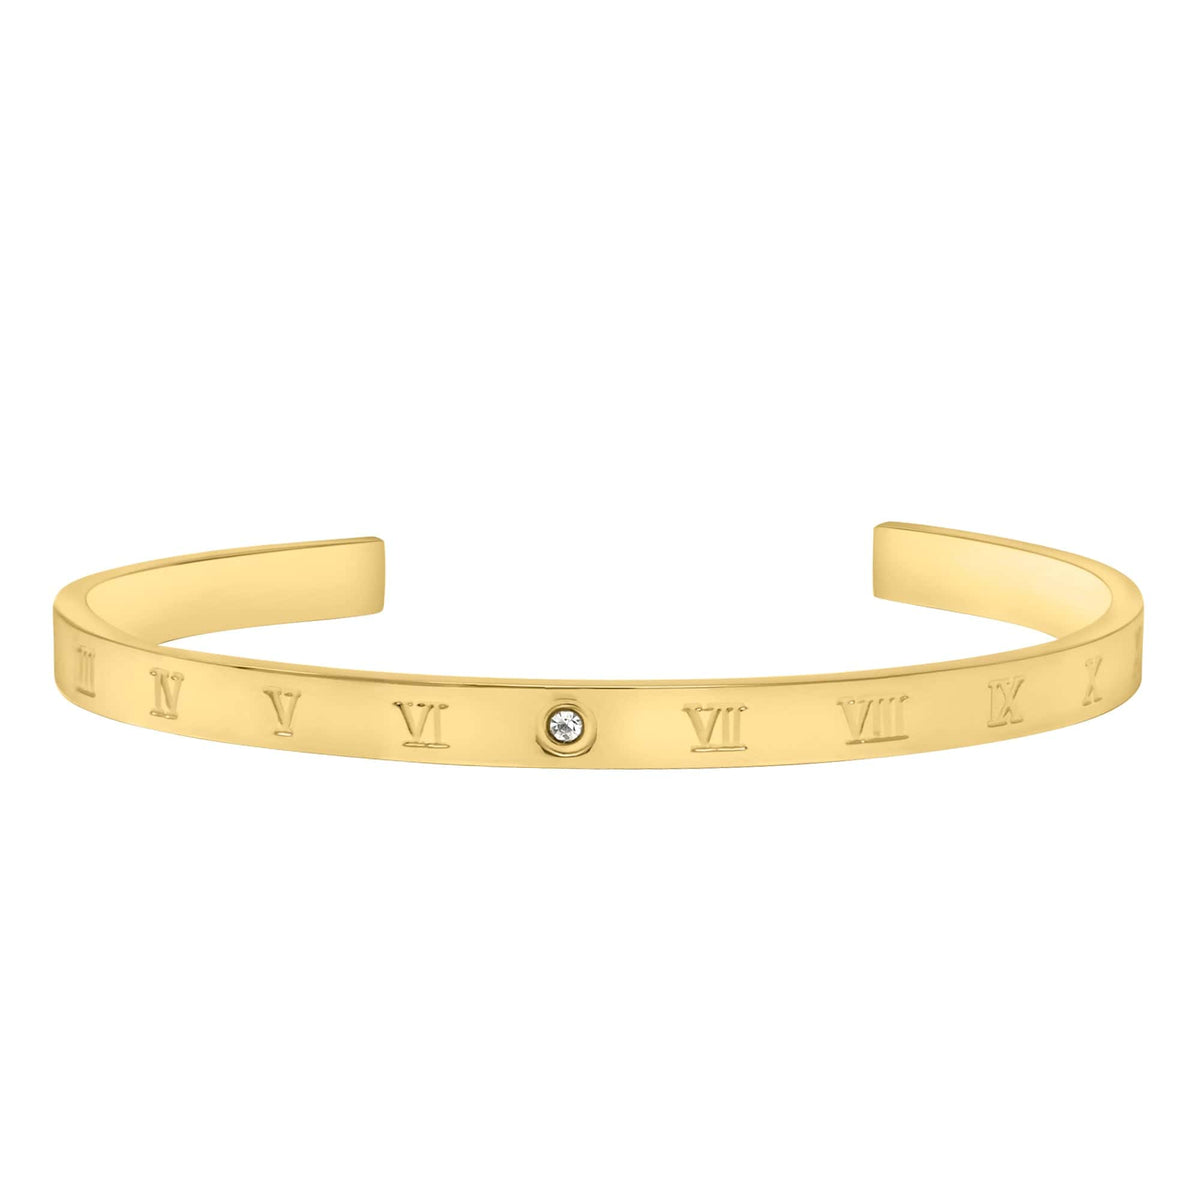 BohoMoon Stainless Steel Numerals Cuff Bracelet Gold